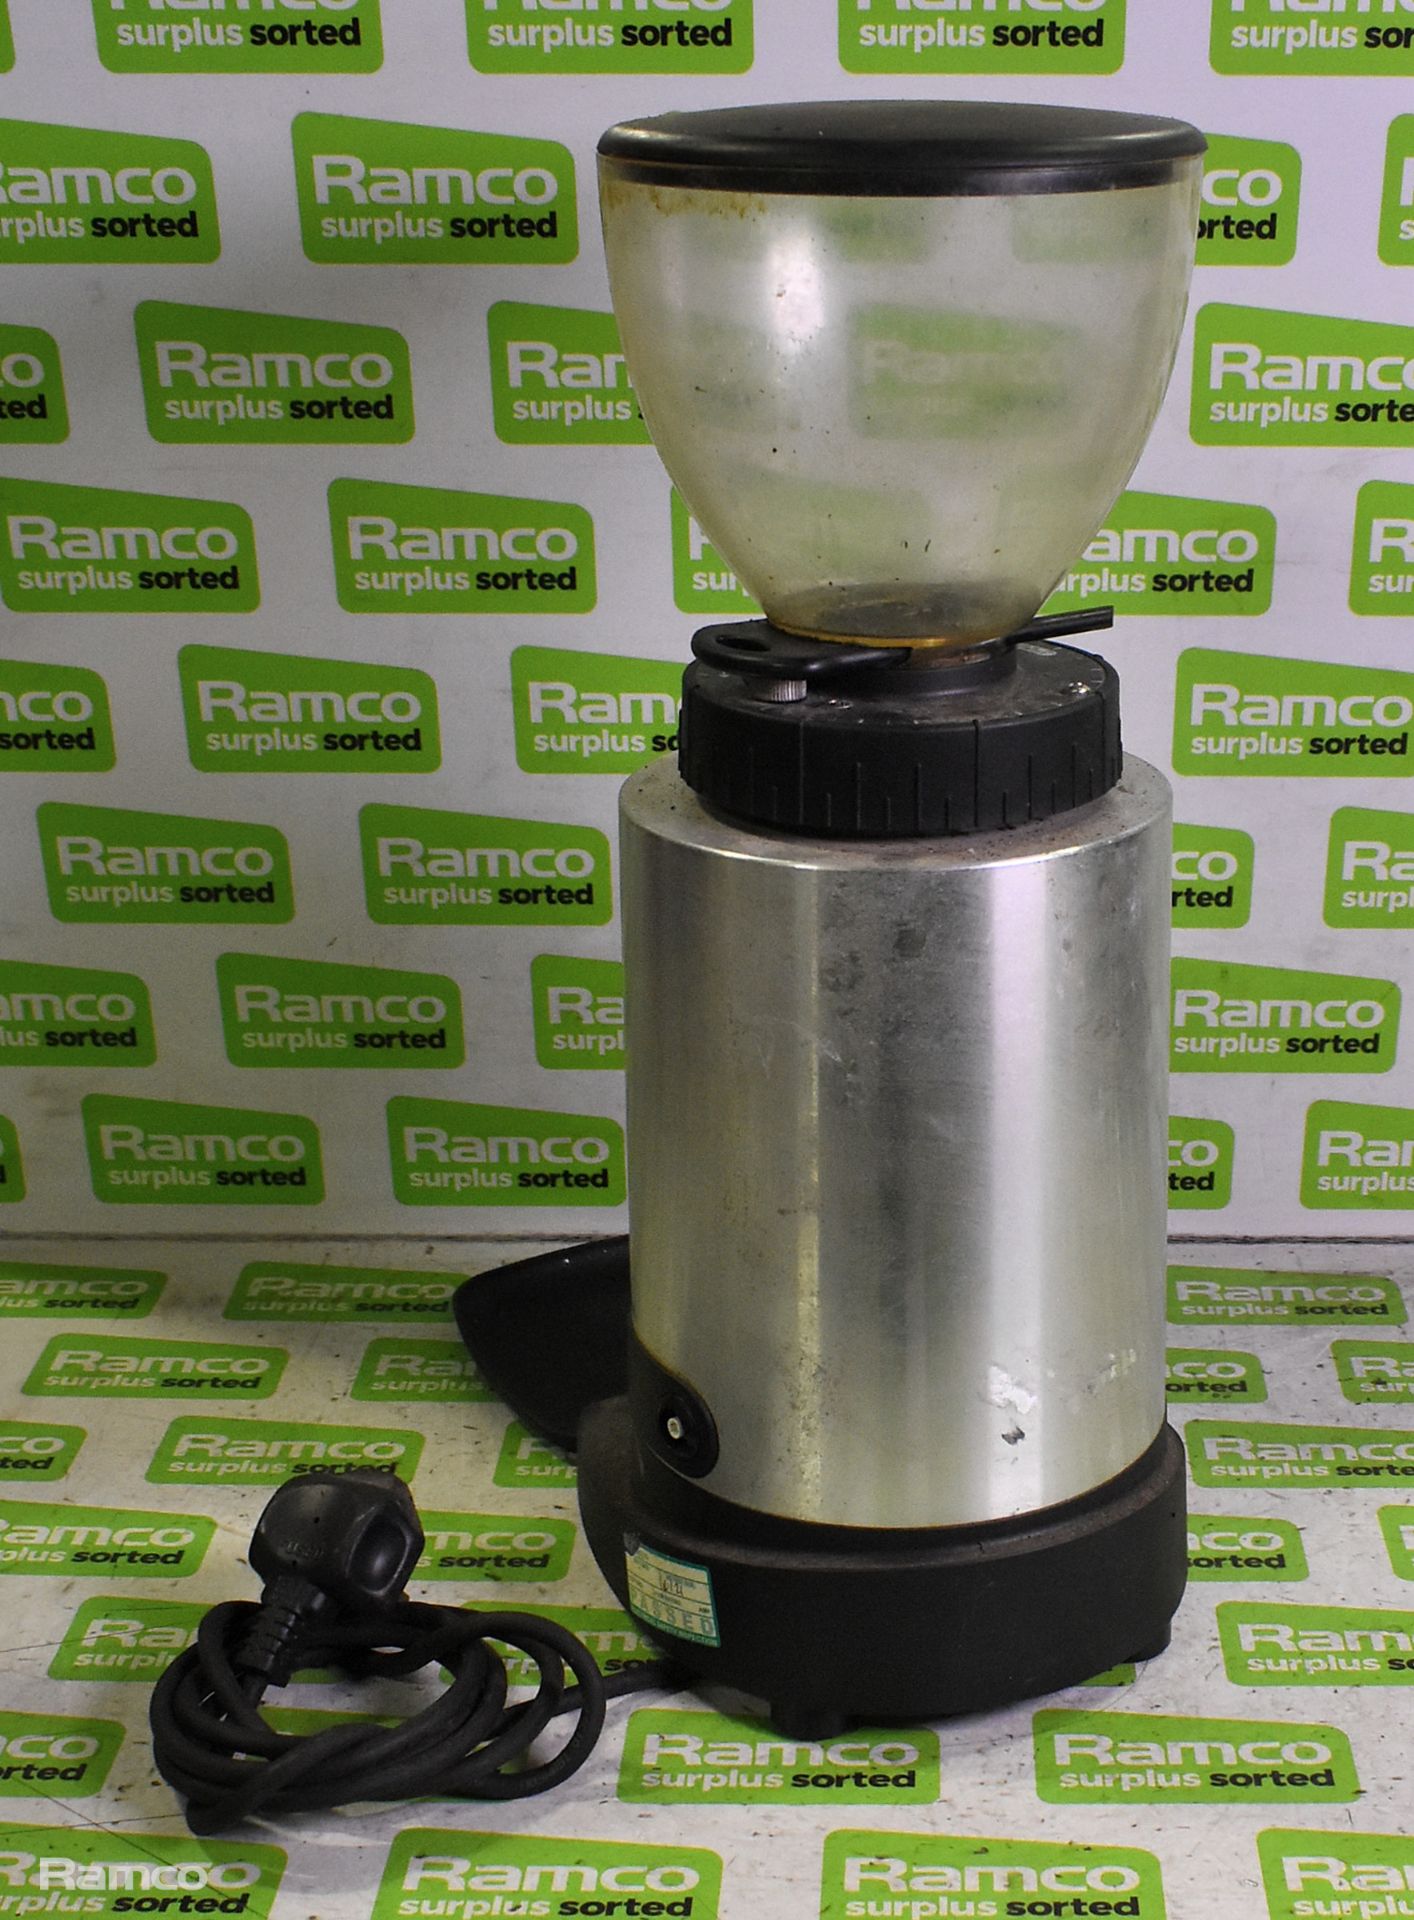 2x Ceado E6P espresso coffee grinders - Image 4 of 6